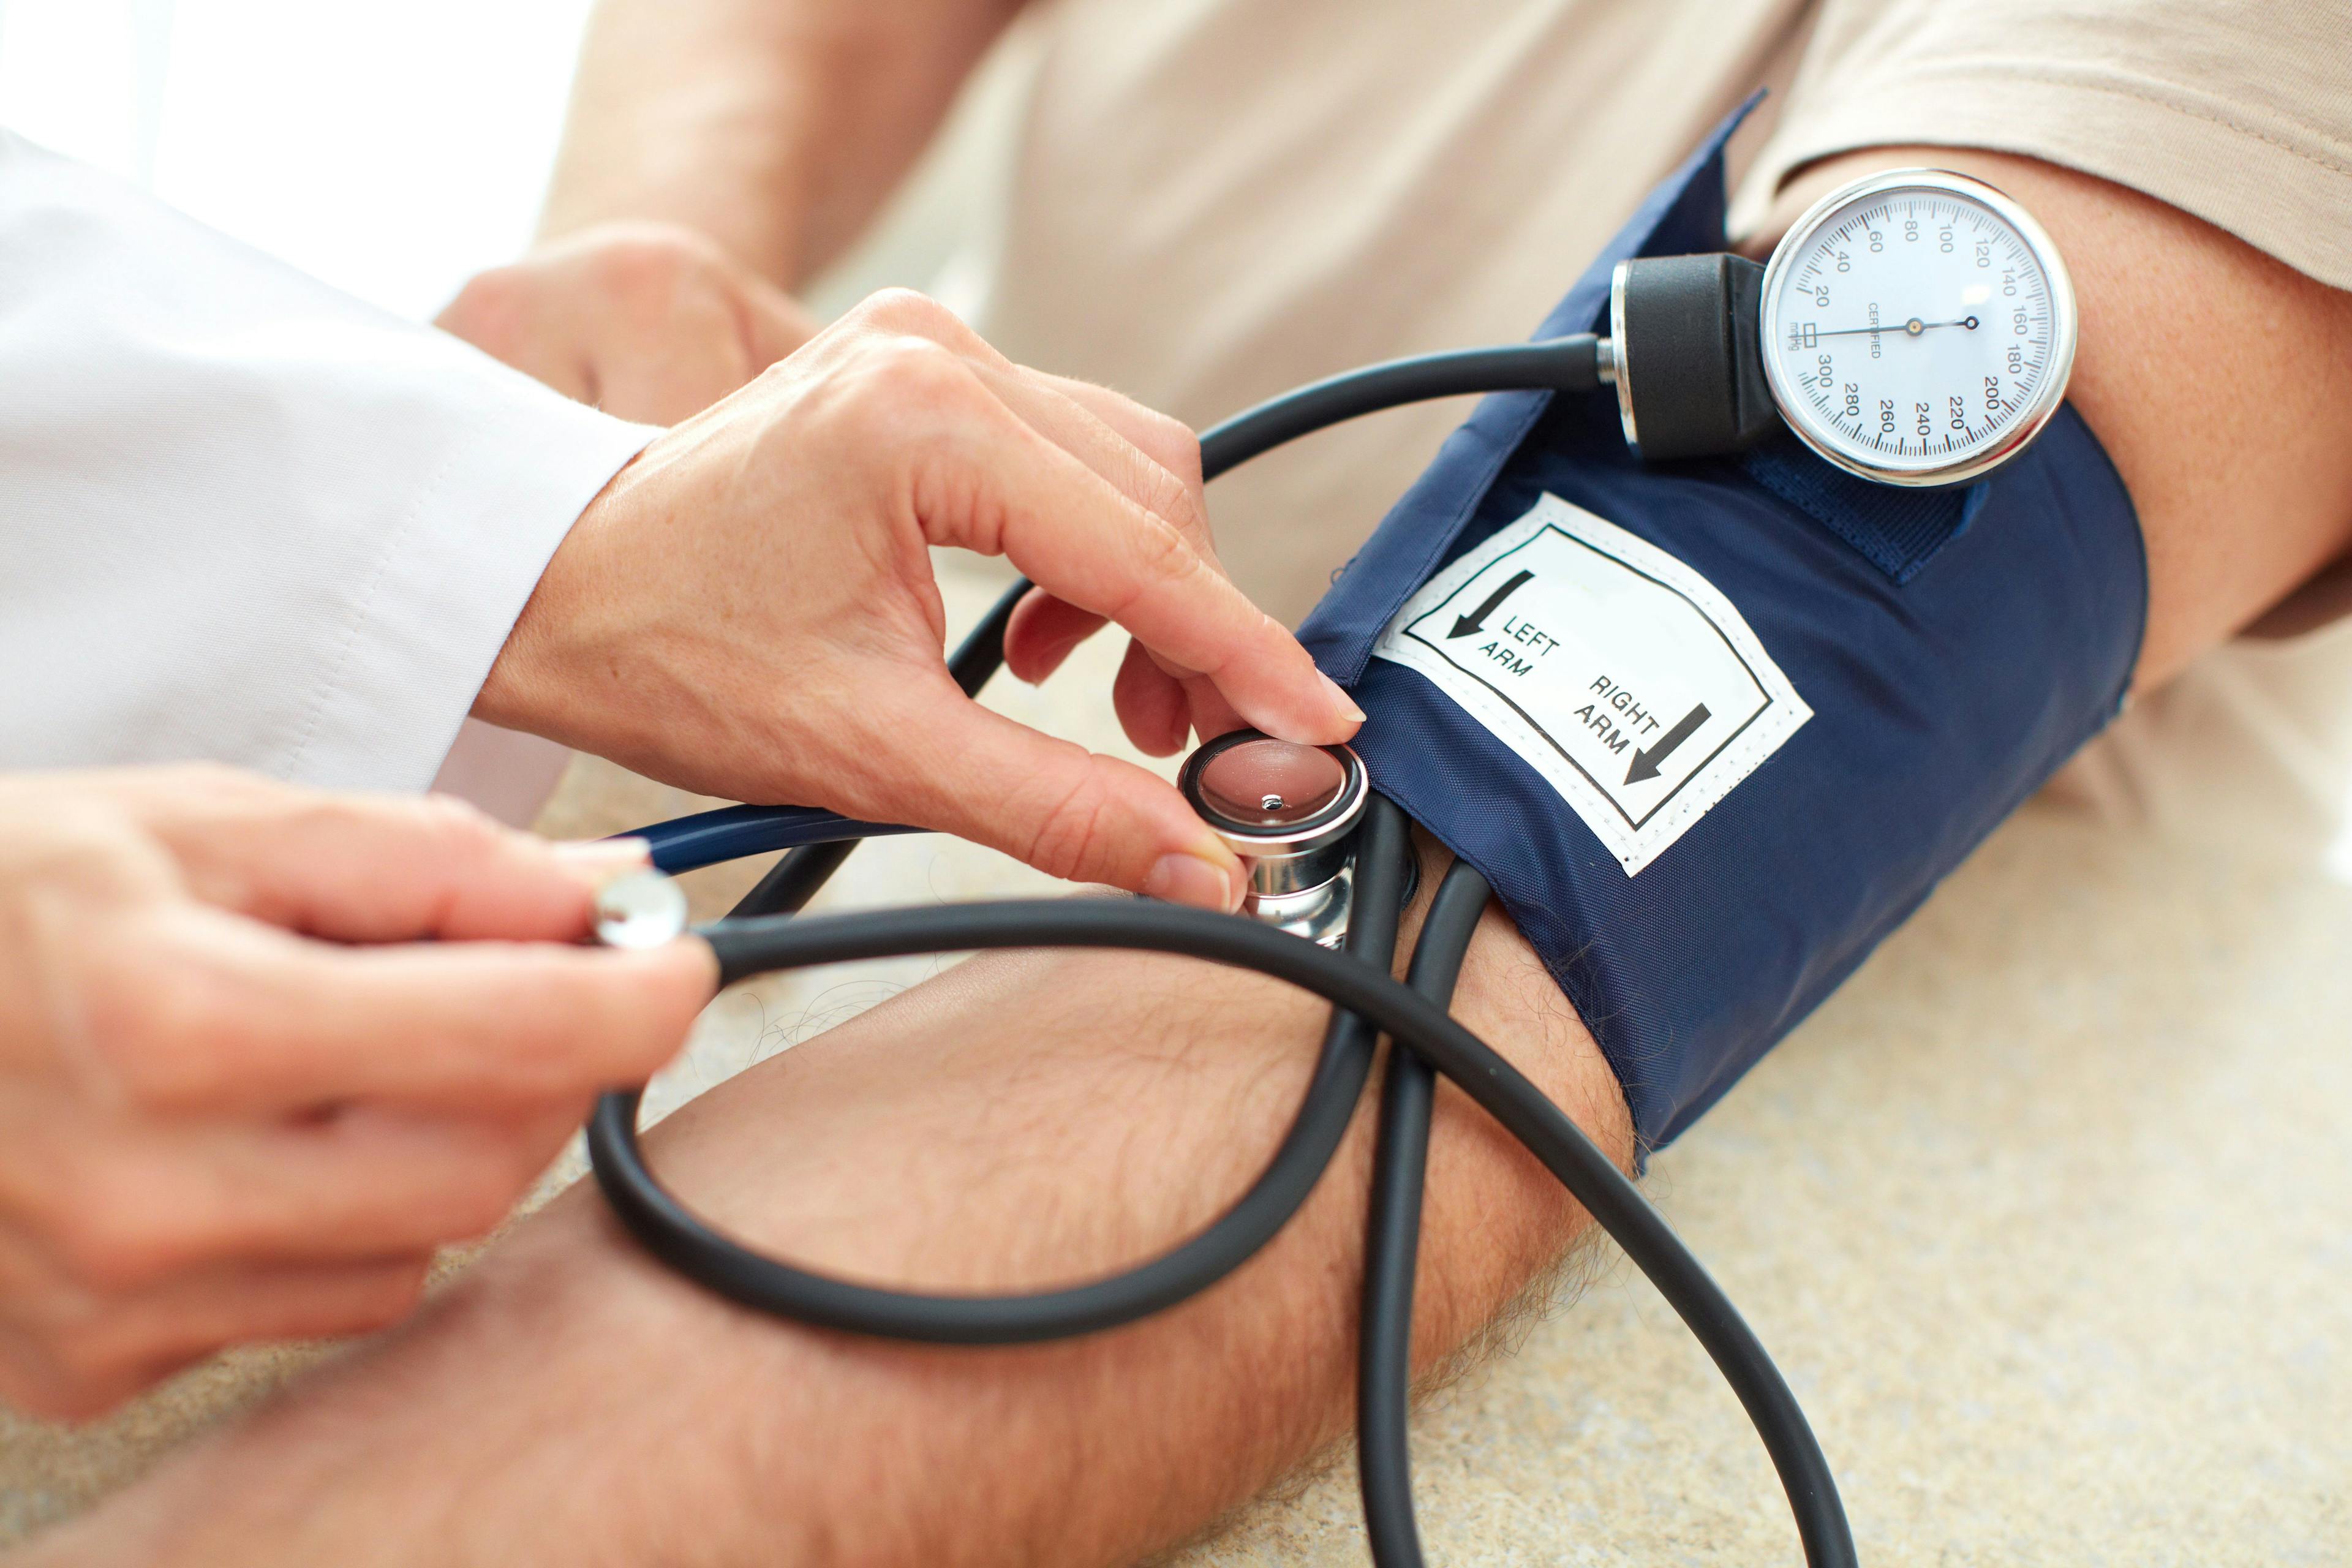 Blood pressure measuring | Image Credit: grinny - stock.adobe.com